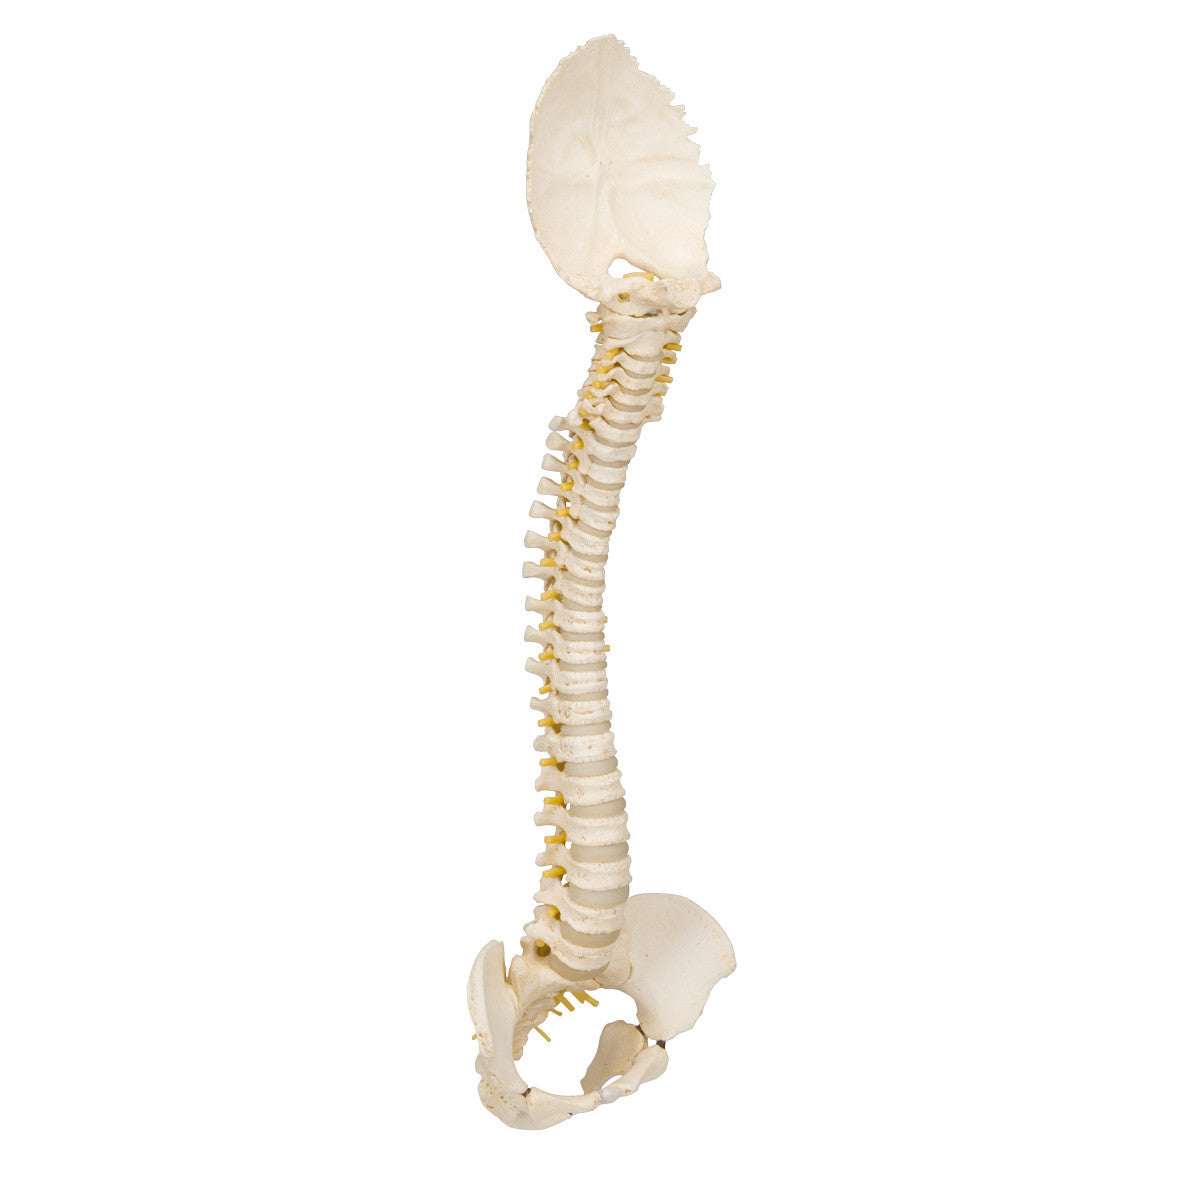 a52_04_1200_1200_bonelike-childs-vertebral-column-model-3b-smart-anatomy__83064.1589753189.1280.1280.jpg